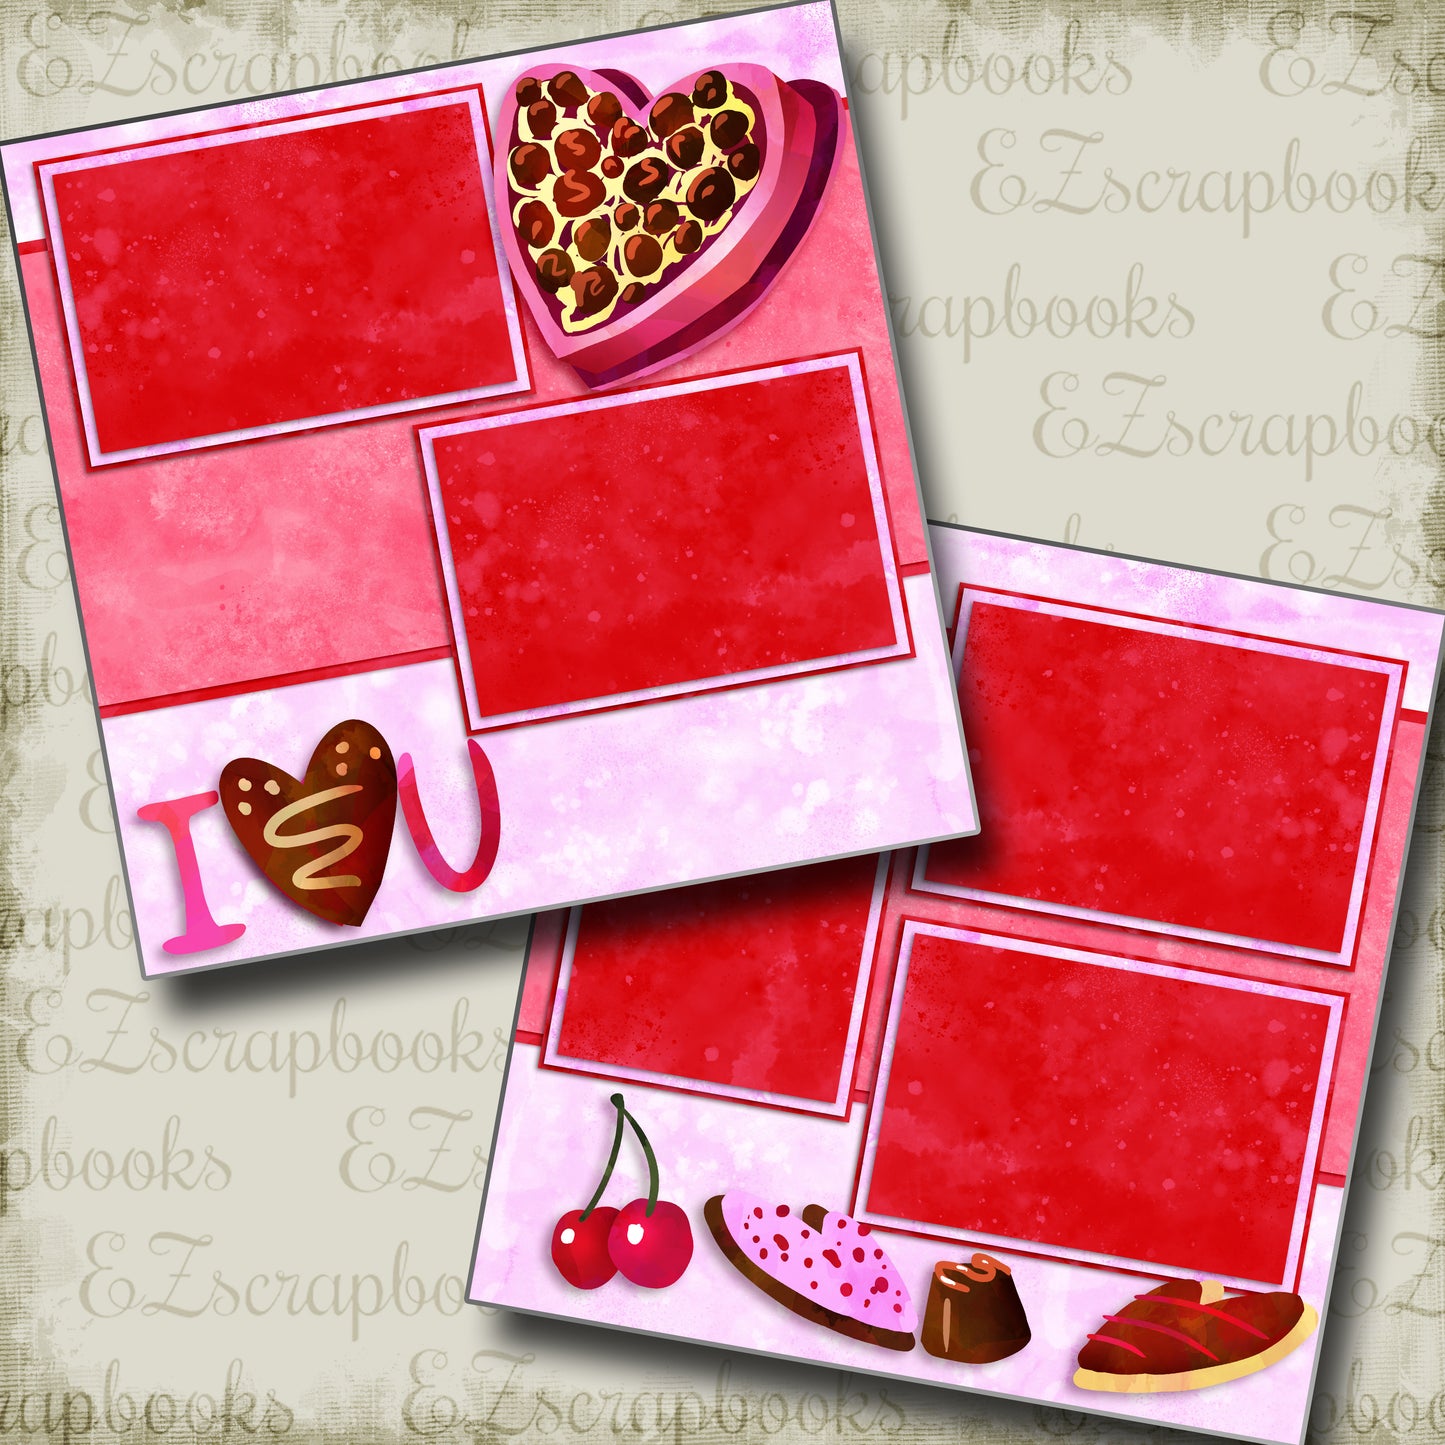 I Heart U - 2787 - EZscrapbooks Scrapbook Layouts Love - Valentine